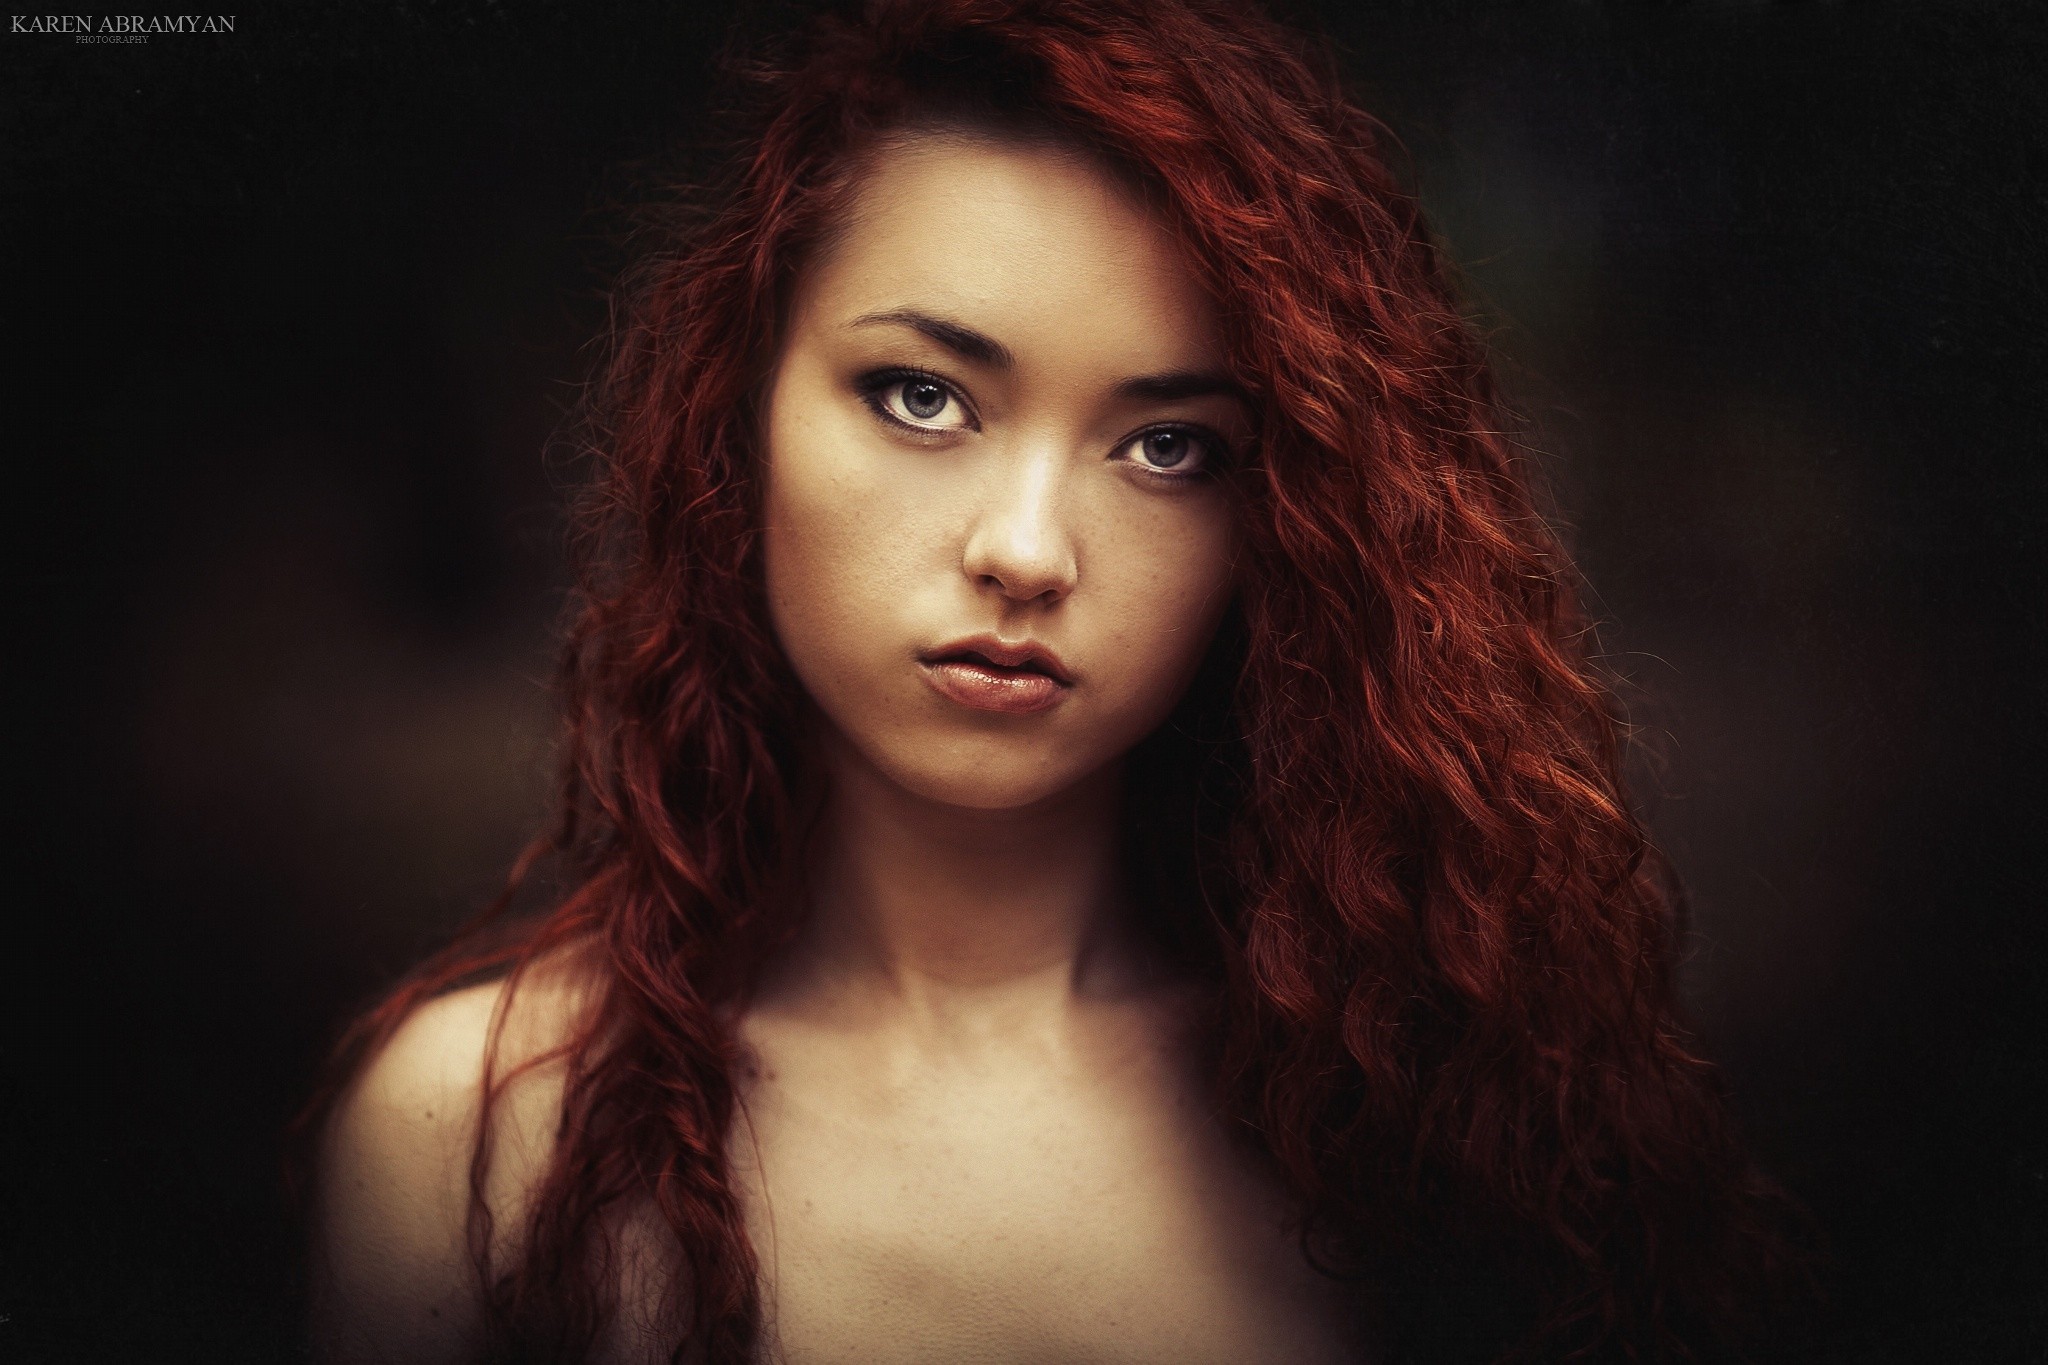 People 2048x1365 redhead model women curly hair face Karen Abramyan watermarked portrait dyed hair long hair looking at viewer